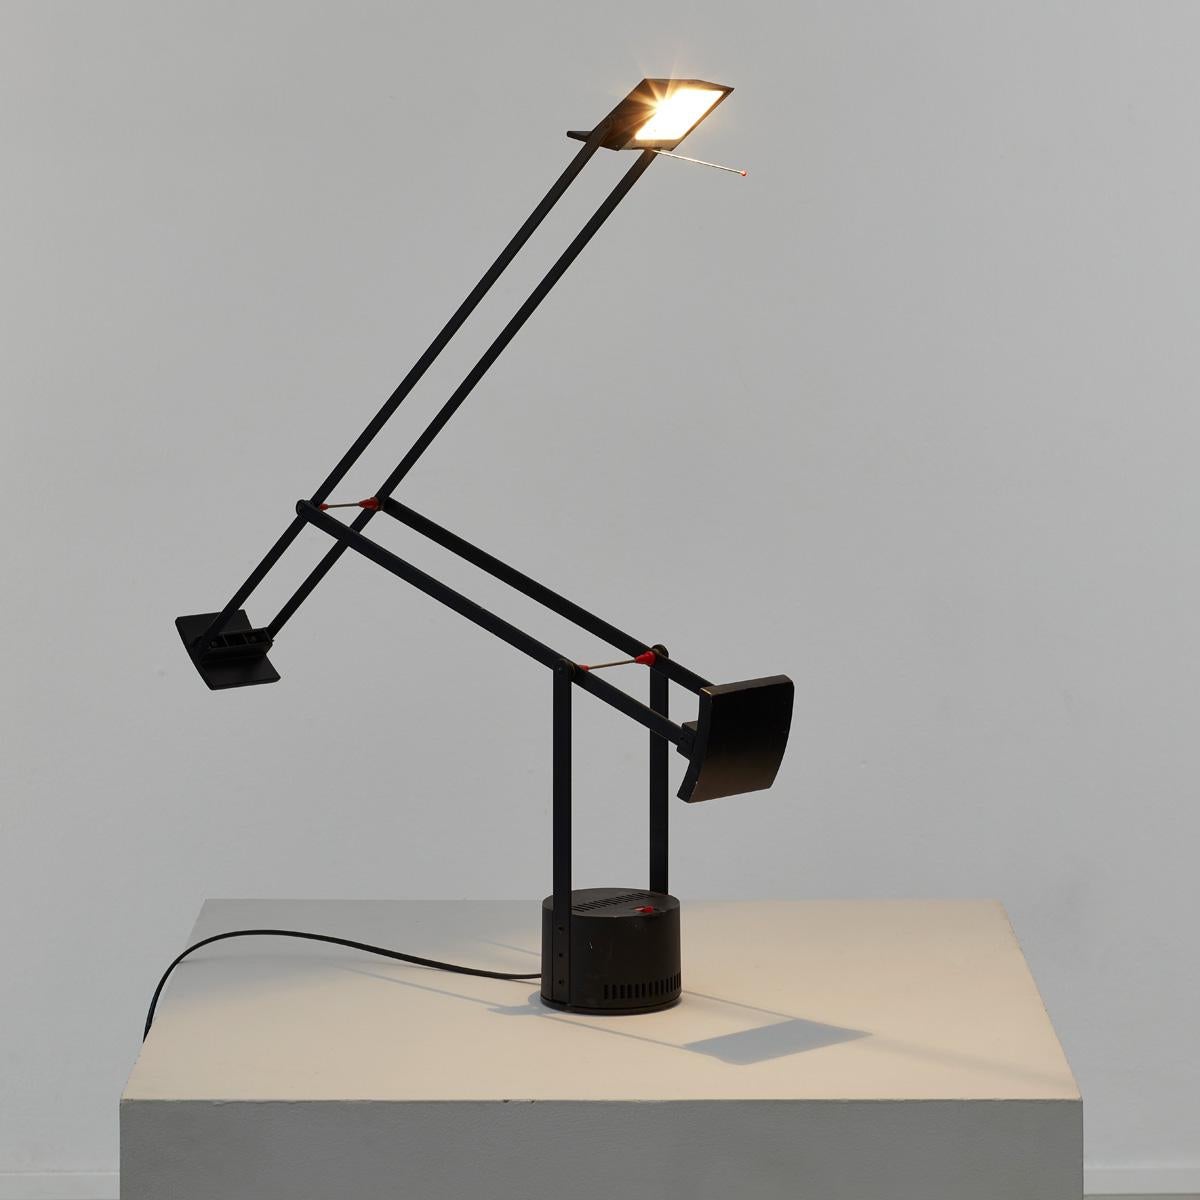 Richard Sapper ‘Tizio’ Table Lamp Artemide, Italy, 1972 For Sale 2